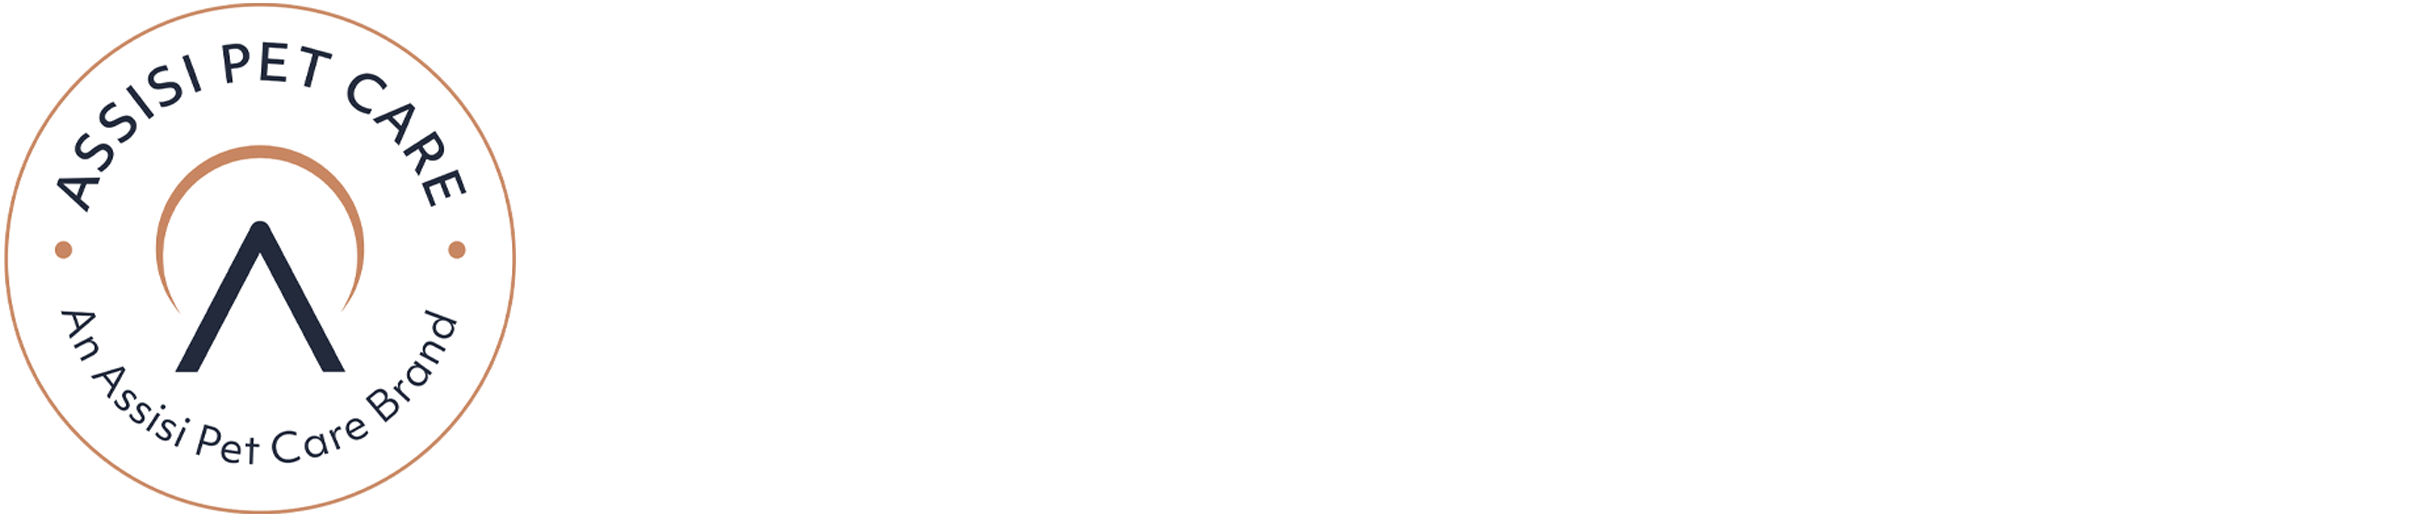 Pet Munchies Medium Salmon Skin Chews Dog Treats 90g